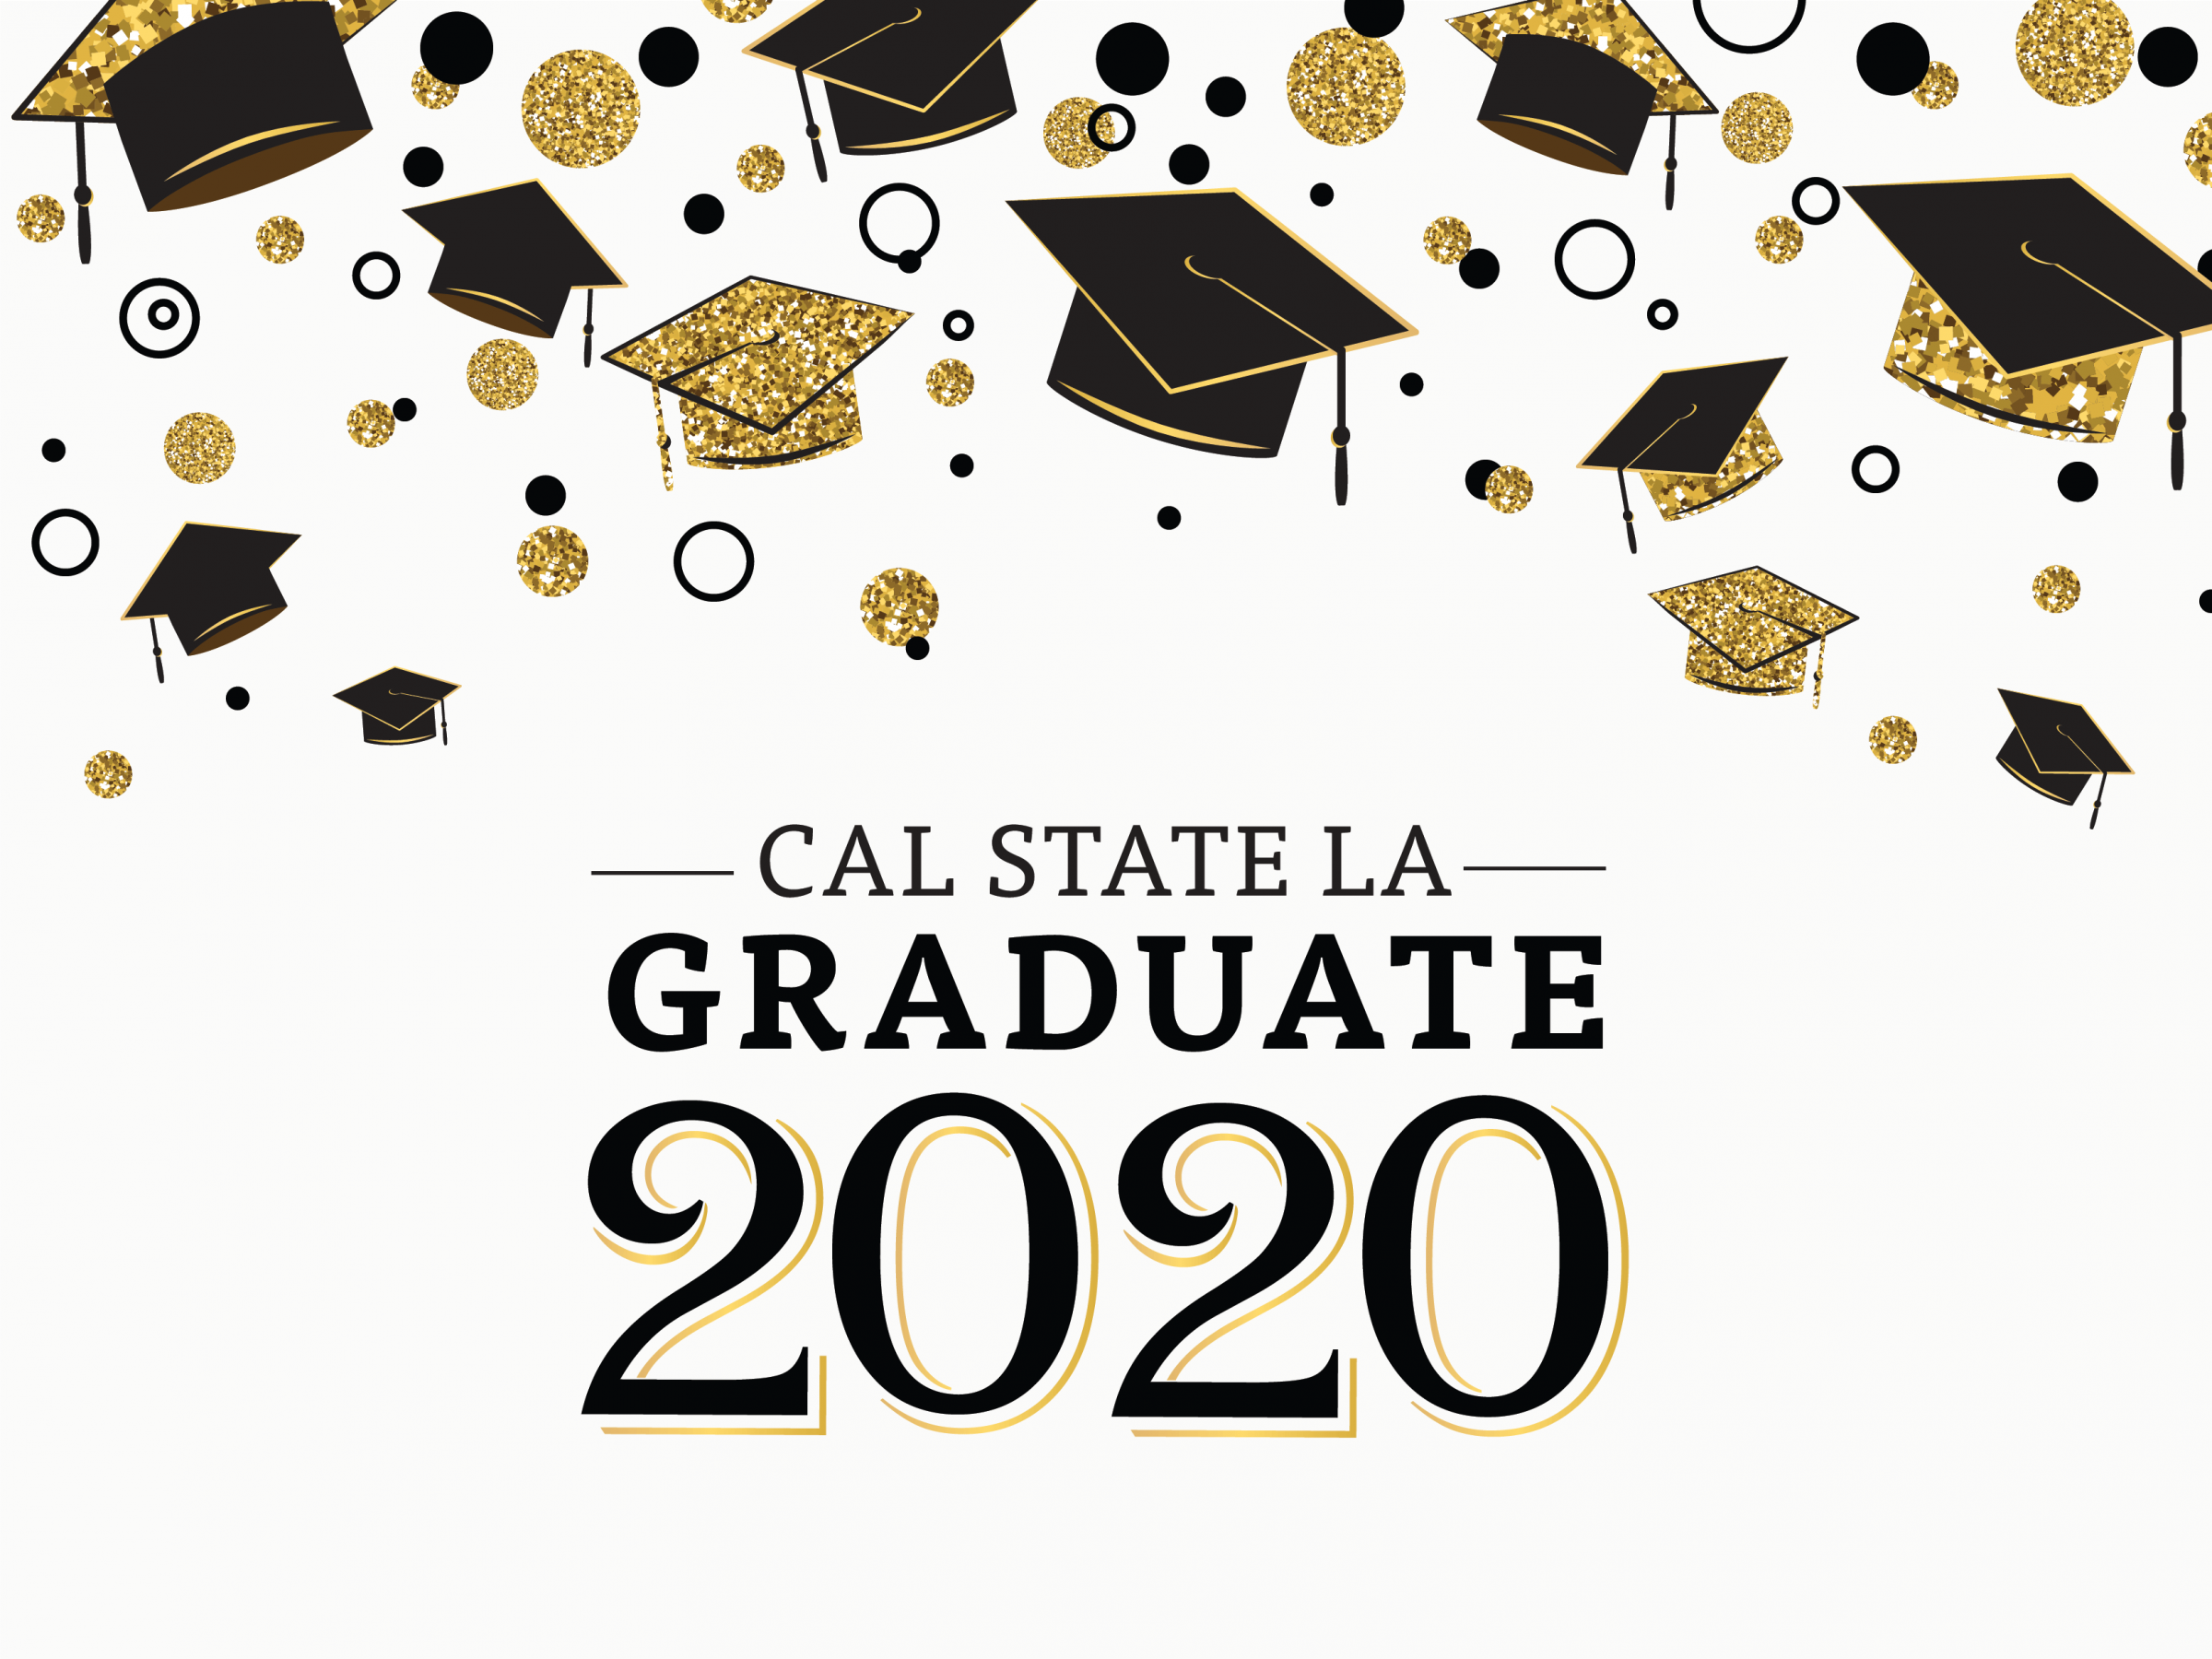 Cal State LA Graduate 2020